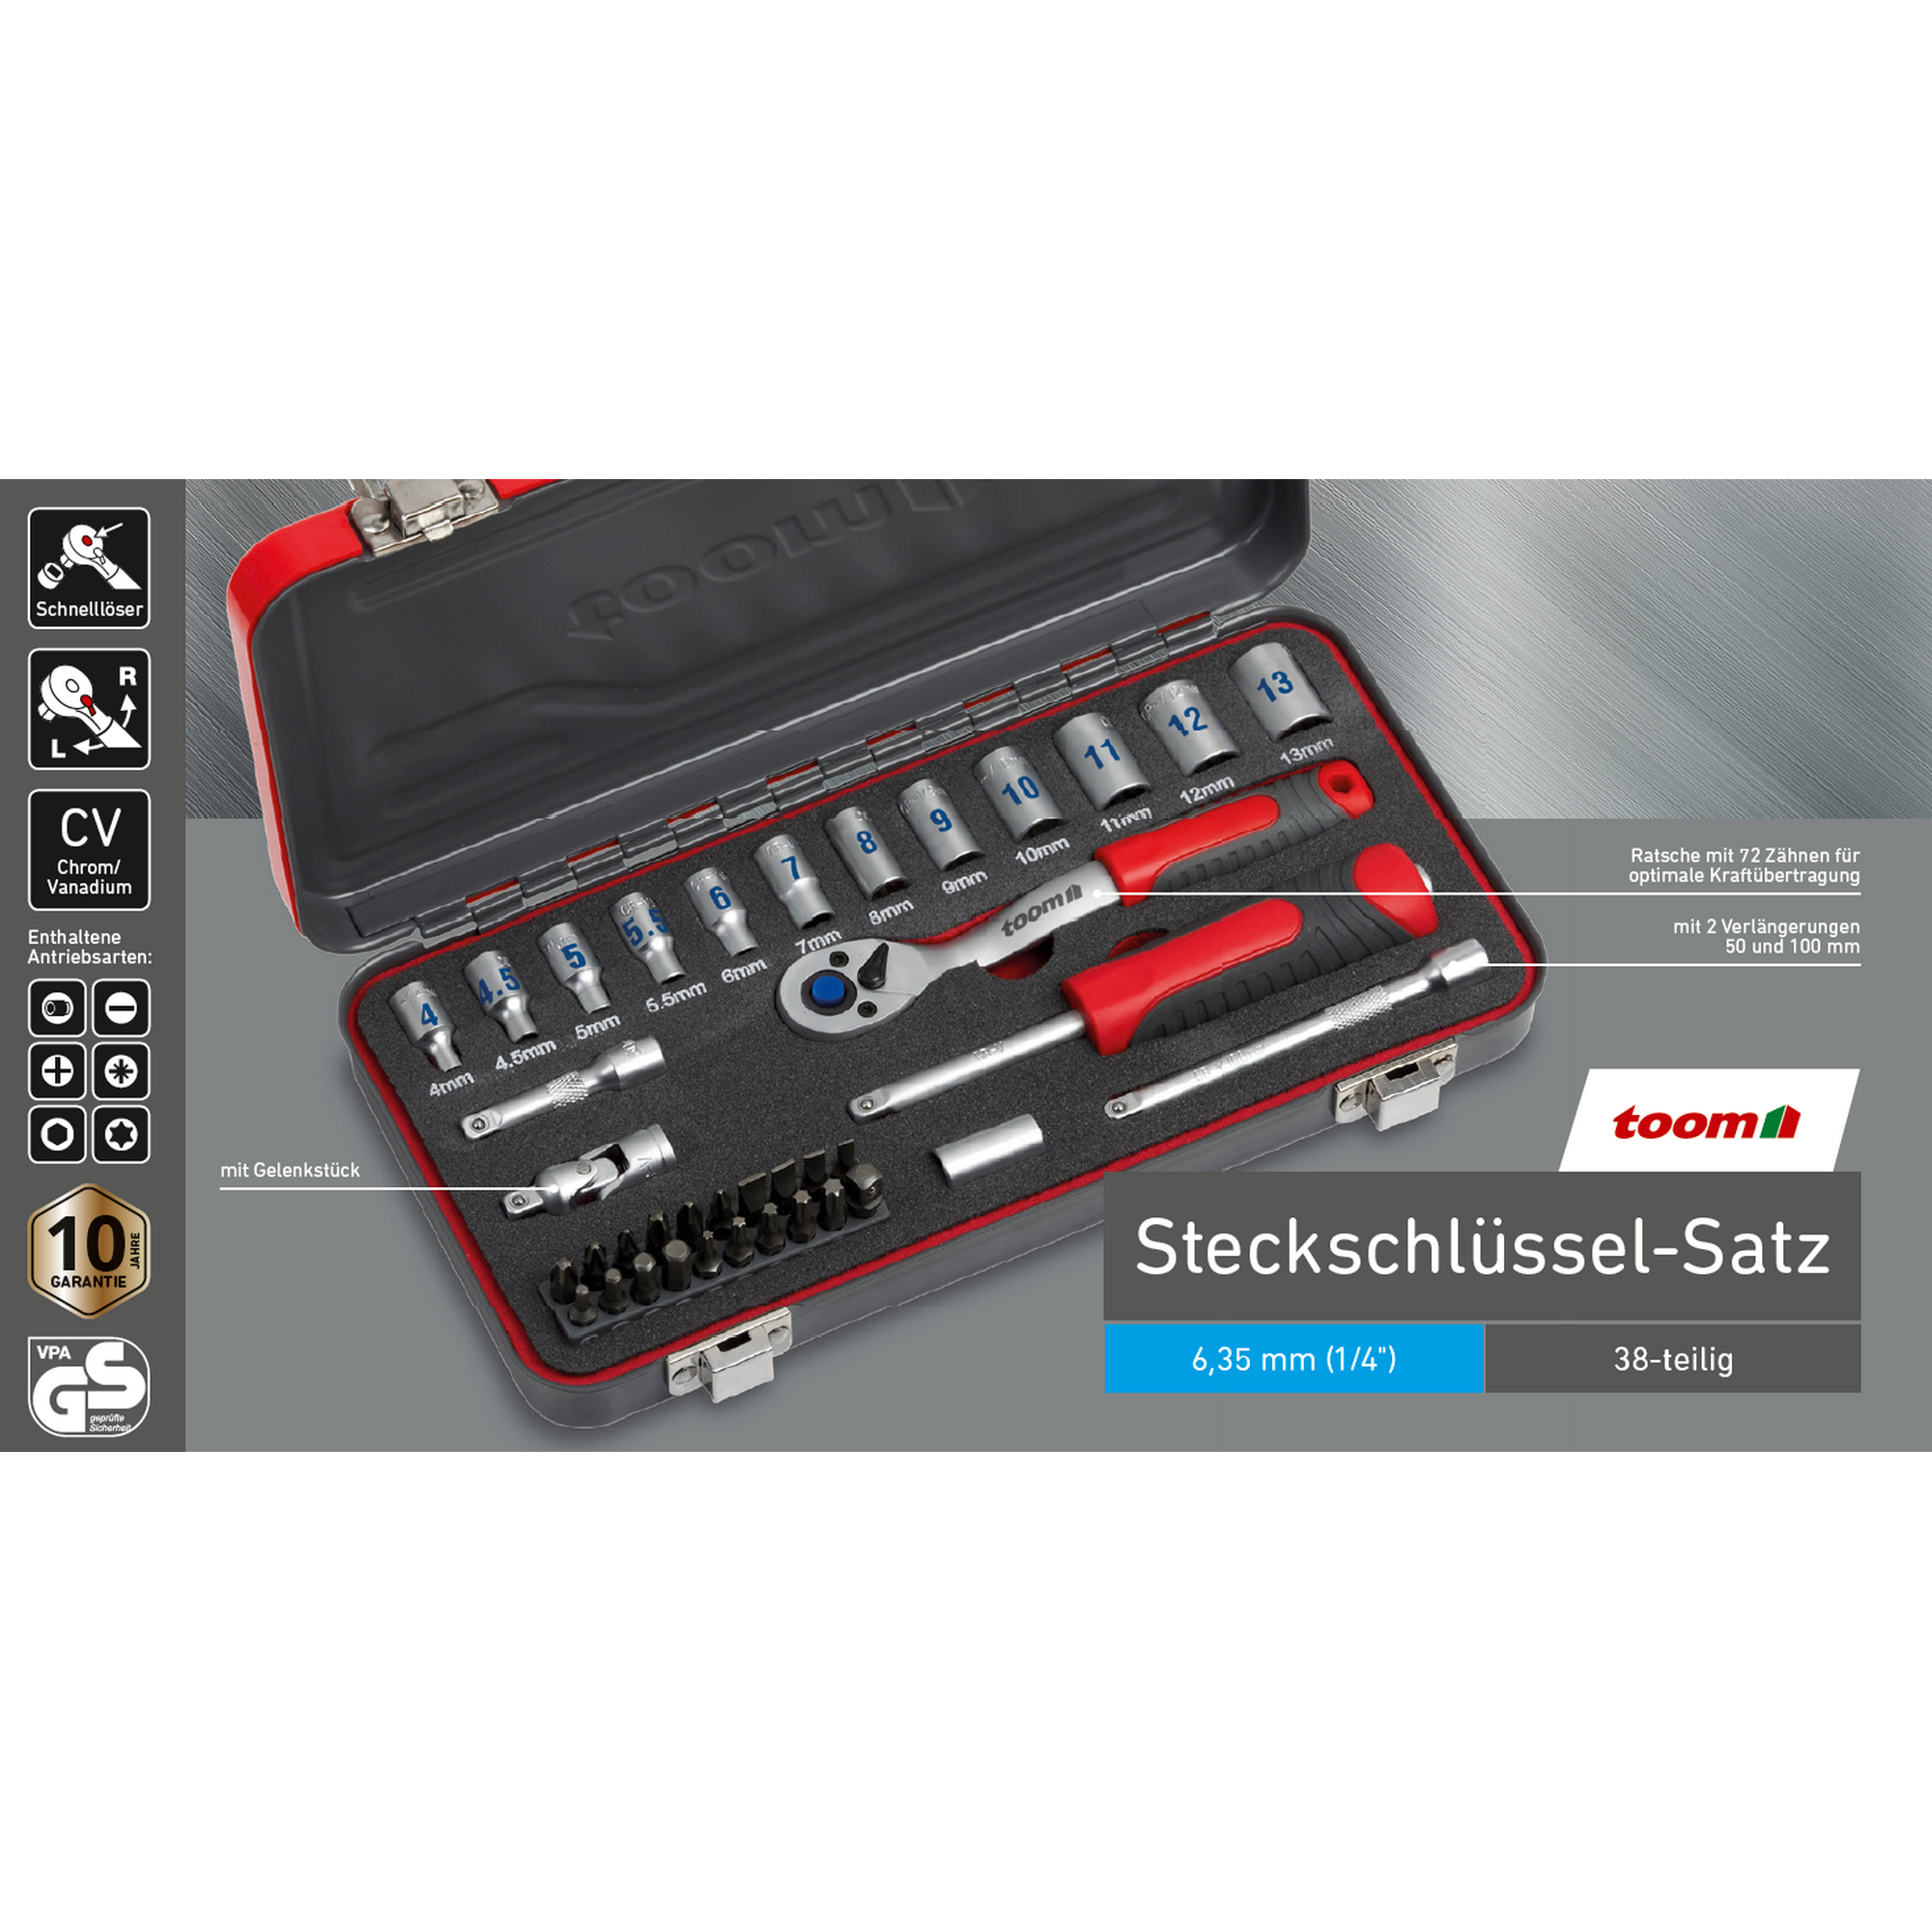 Steckschlüssel-Set 1/4" 38-teilig + product picture